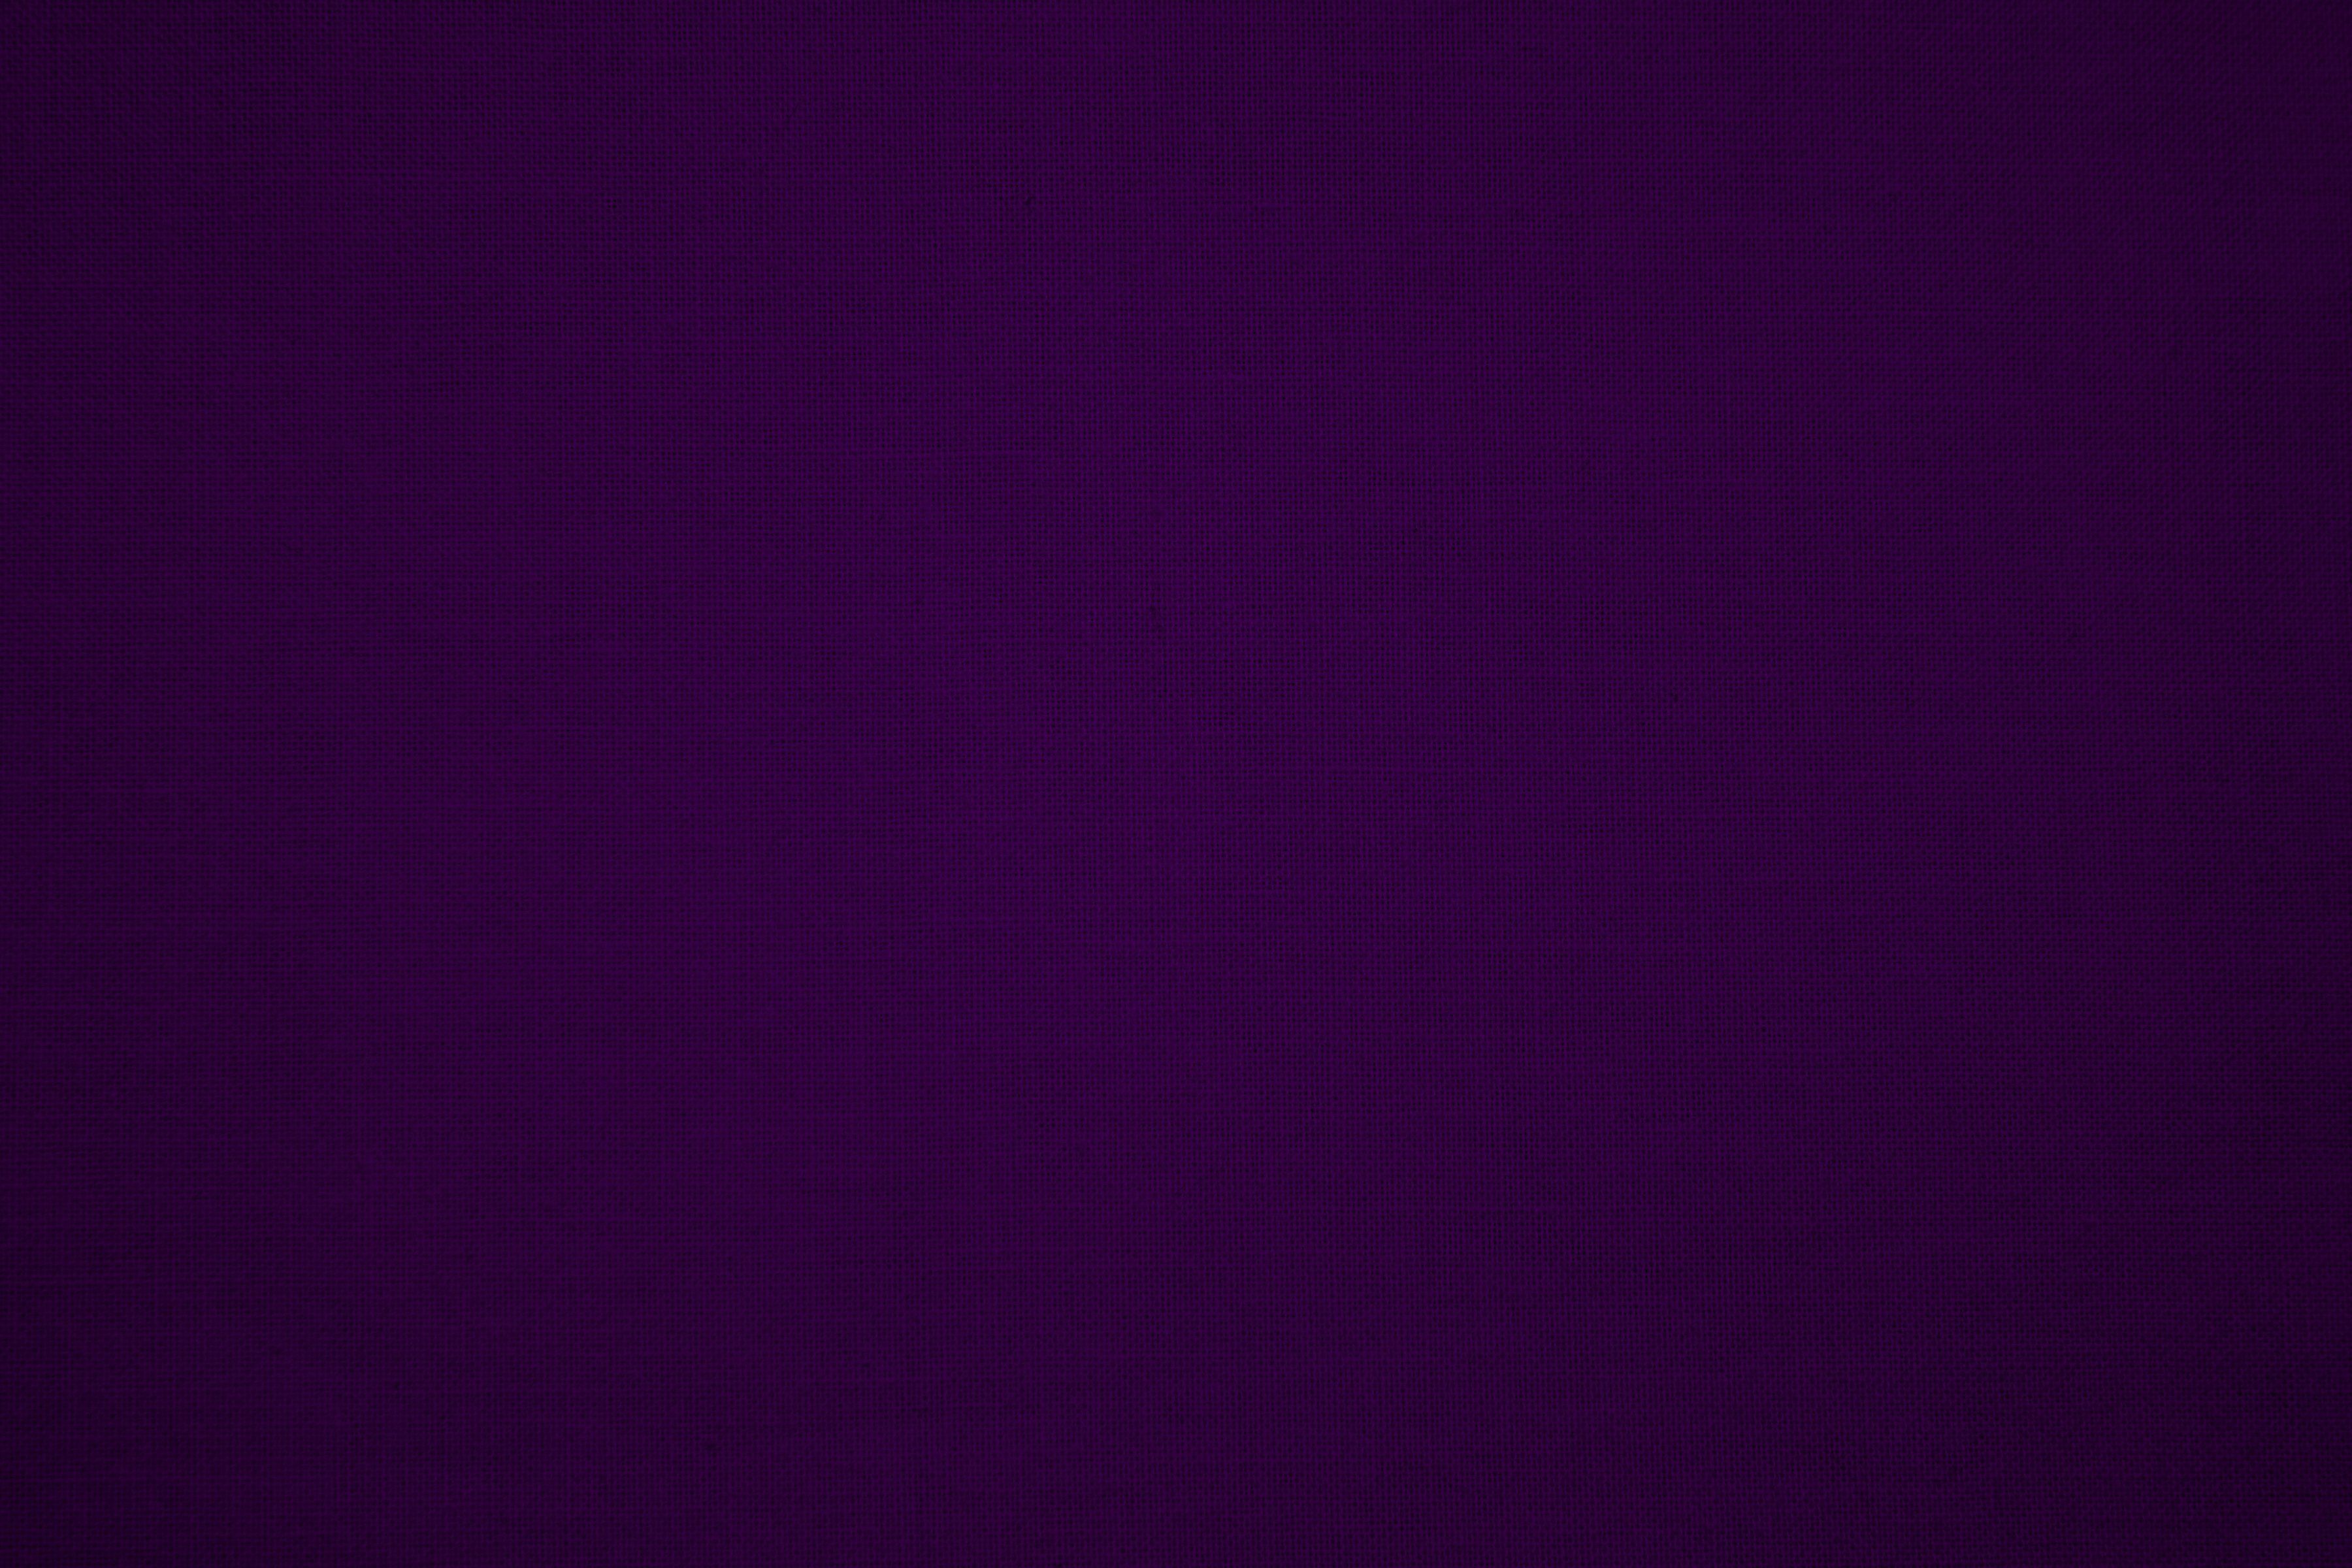 Light Purple Solid Wallpaper Images Amp Pictures Becuo Light Purple  Wallpaper Background Wallpapers For Desktop Download Pattern Iphone Free Pc  Living Room Purple Background  फट शयर